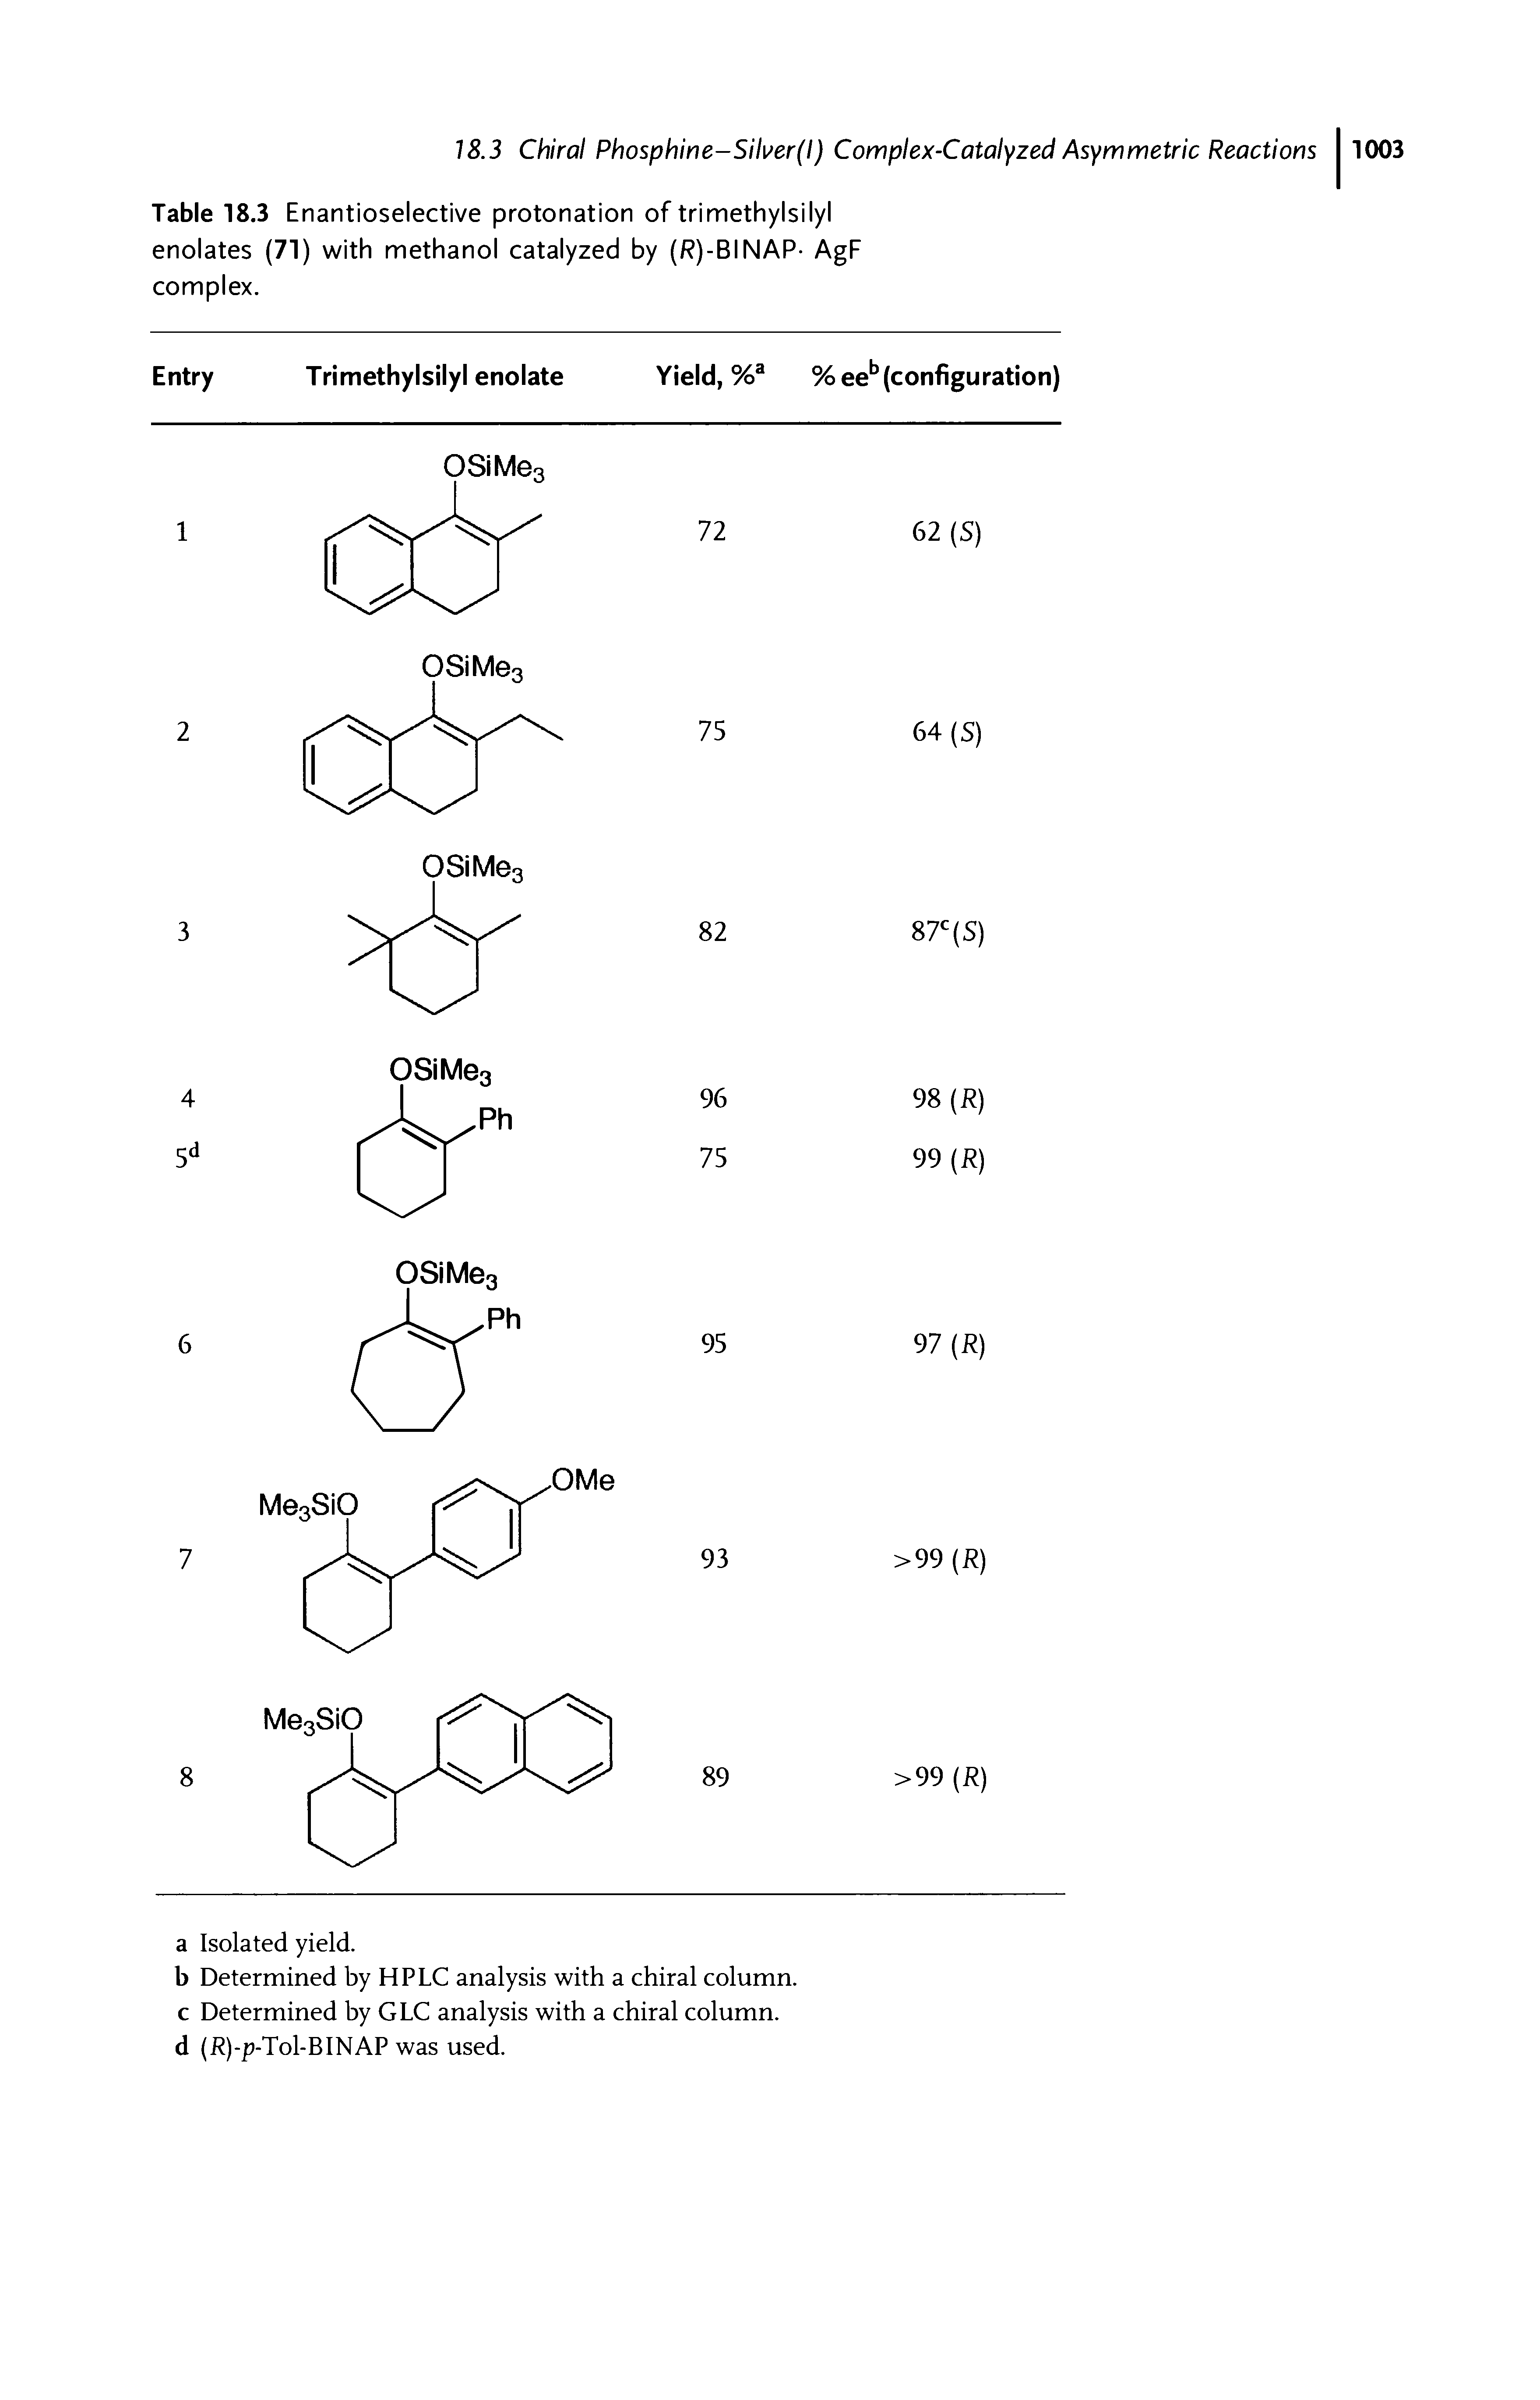 Table 18.3 Enantioselective protonation of trimethylsilyl enolates (71) with methanol catalyzed by (R)-BINAP- AgF complex.